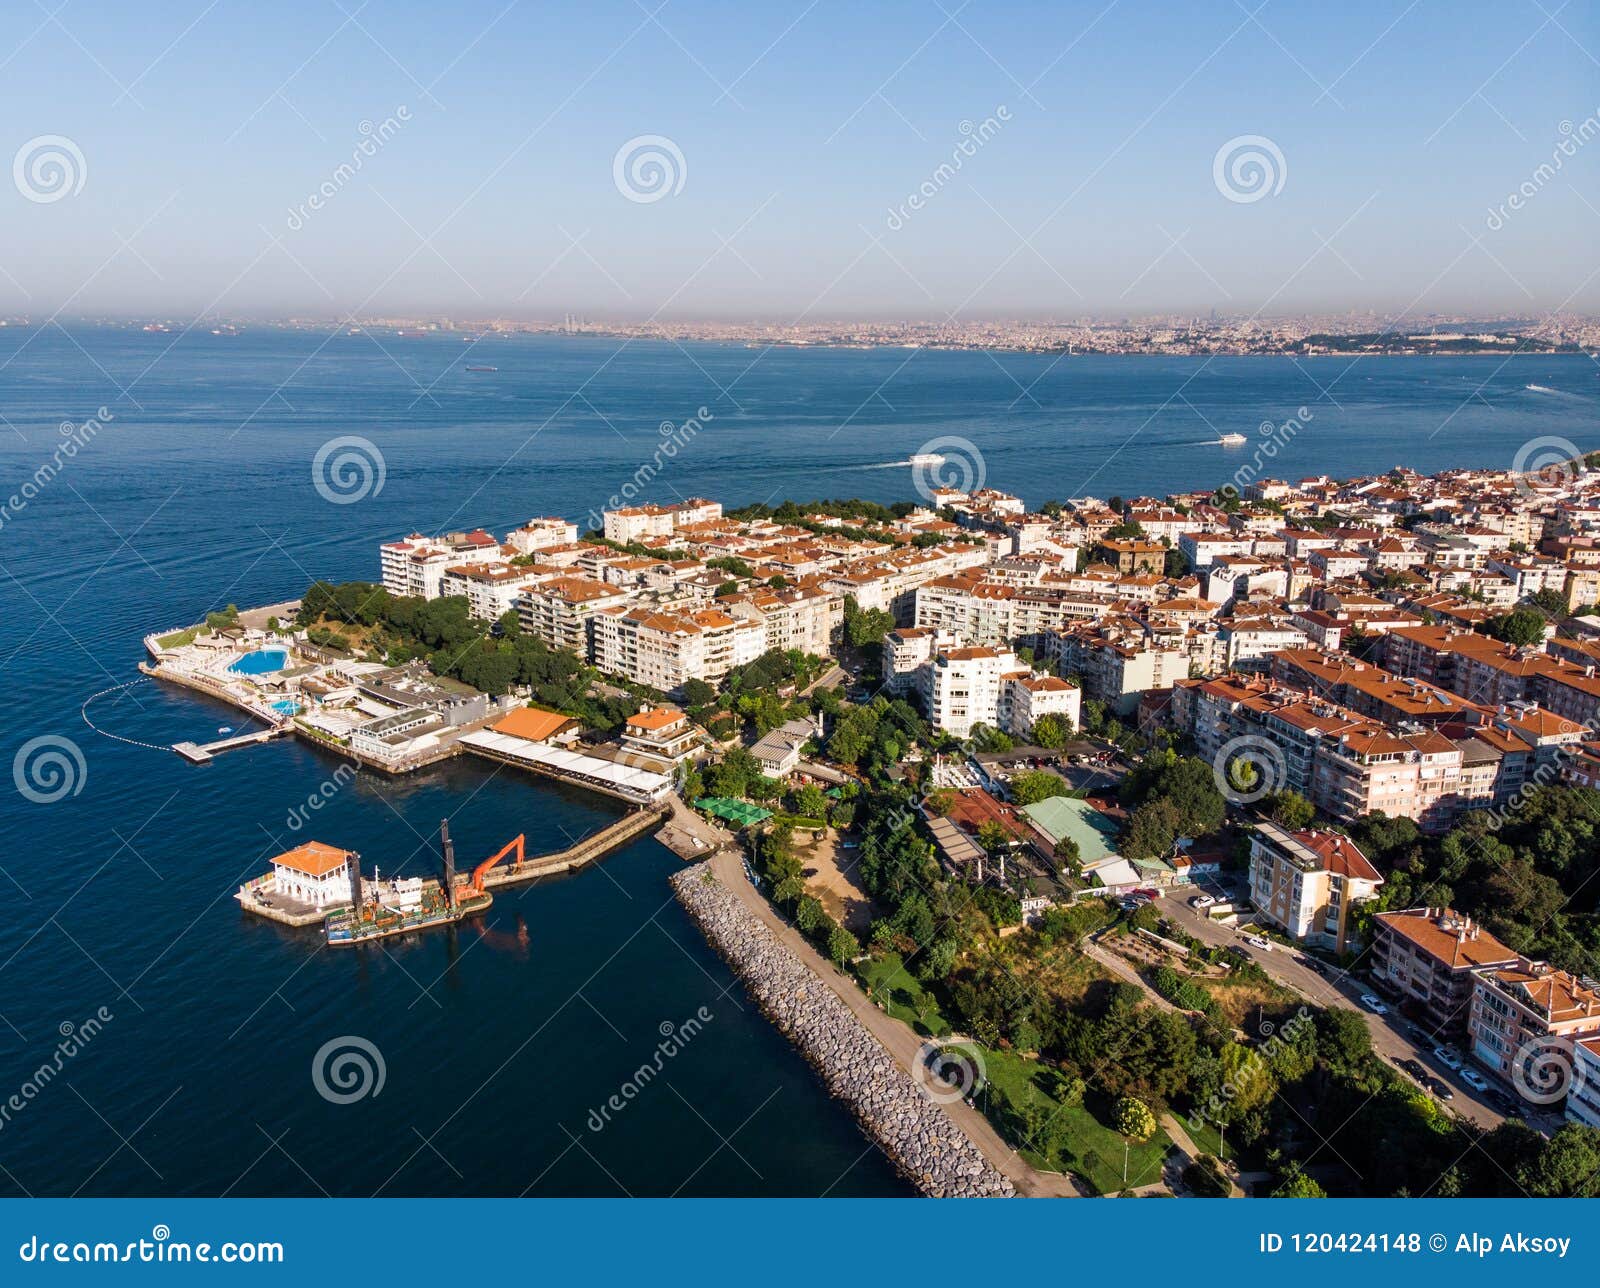 aerial drone view of kadikoy moda seaside in istanbul